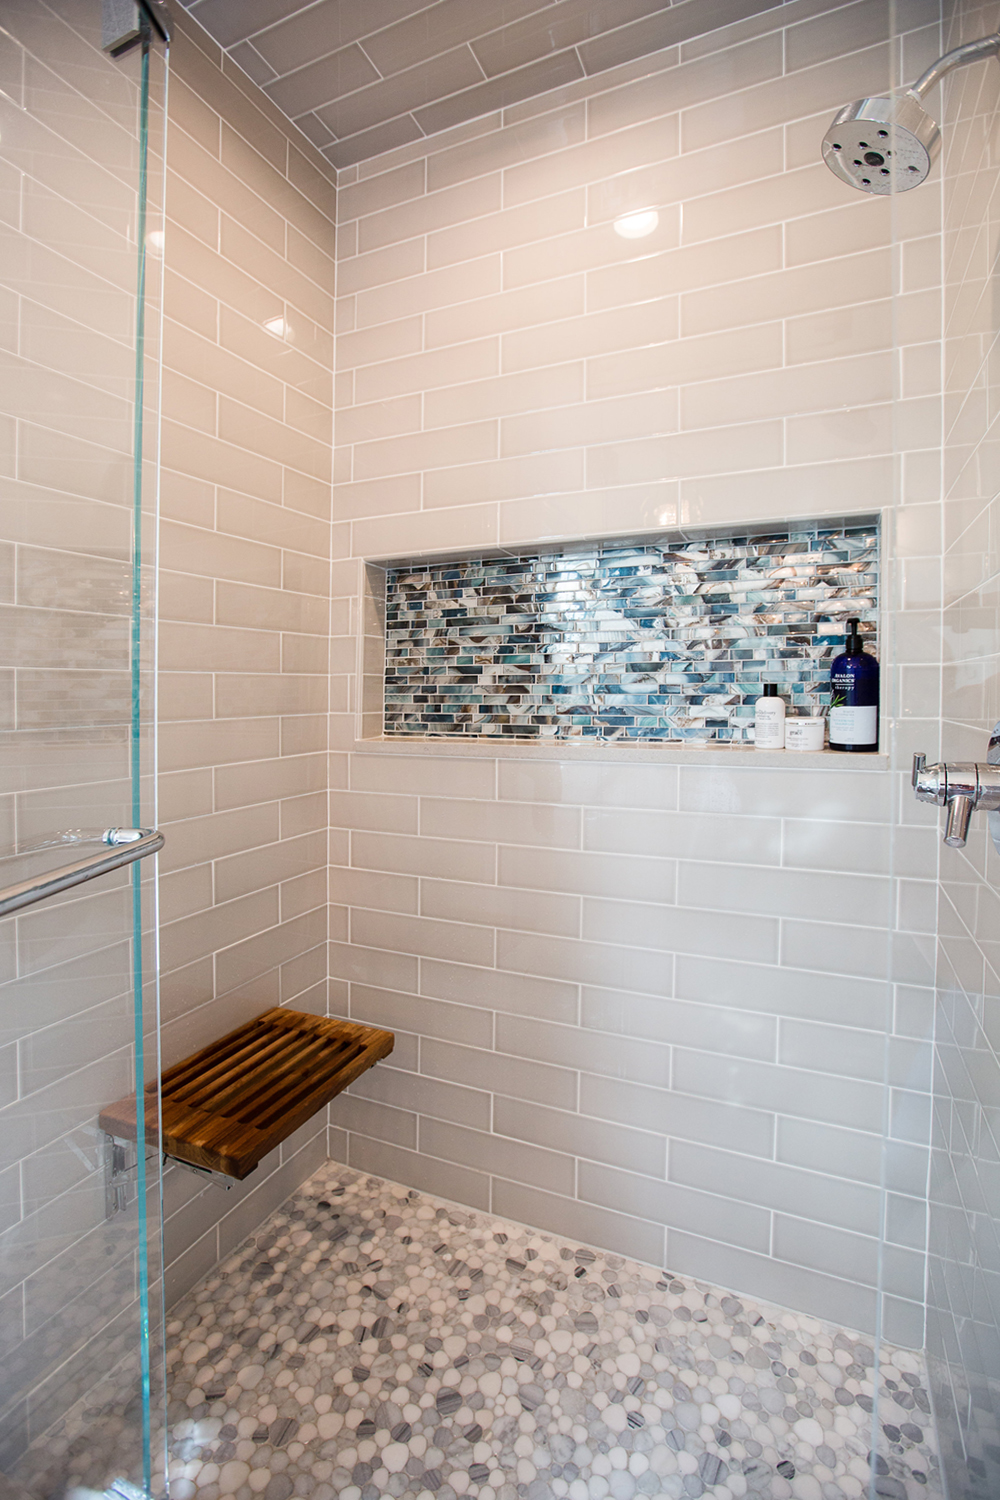 Georgeson Style Bathroom Shower Design: Tile